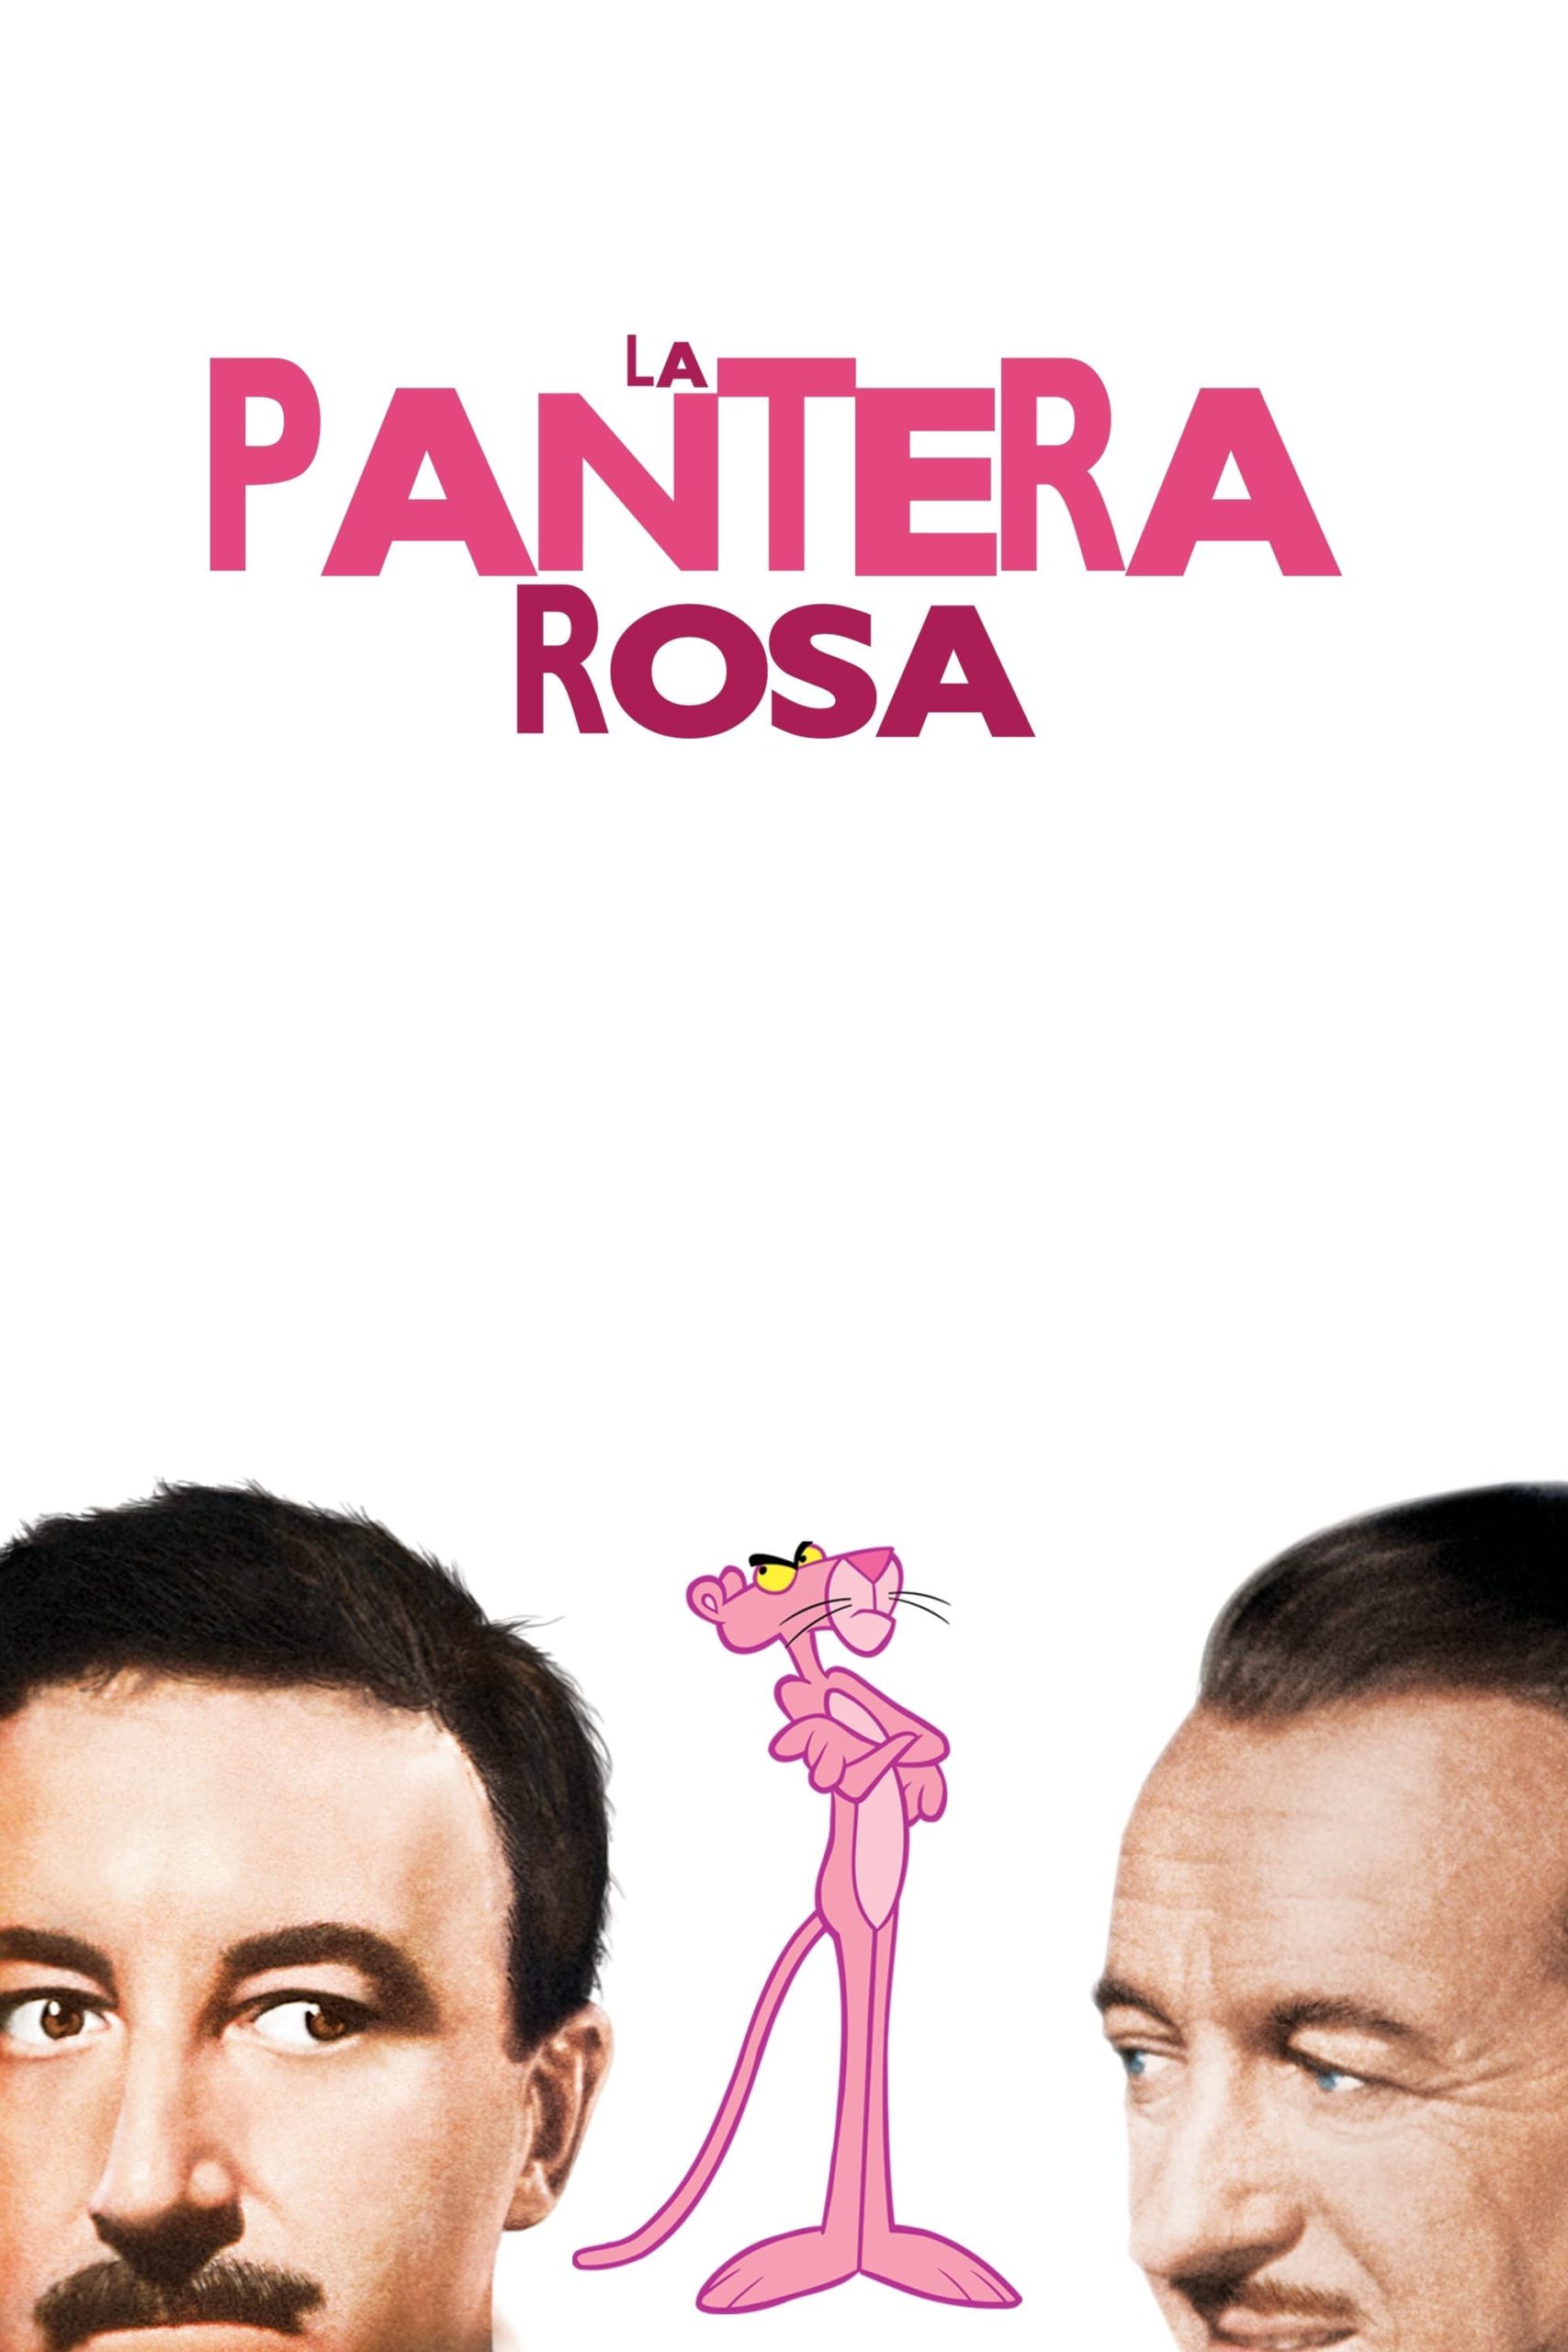 La Pantera Rosa [HD] (1964)